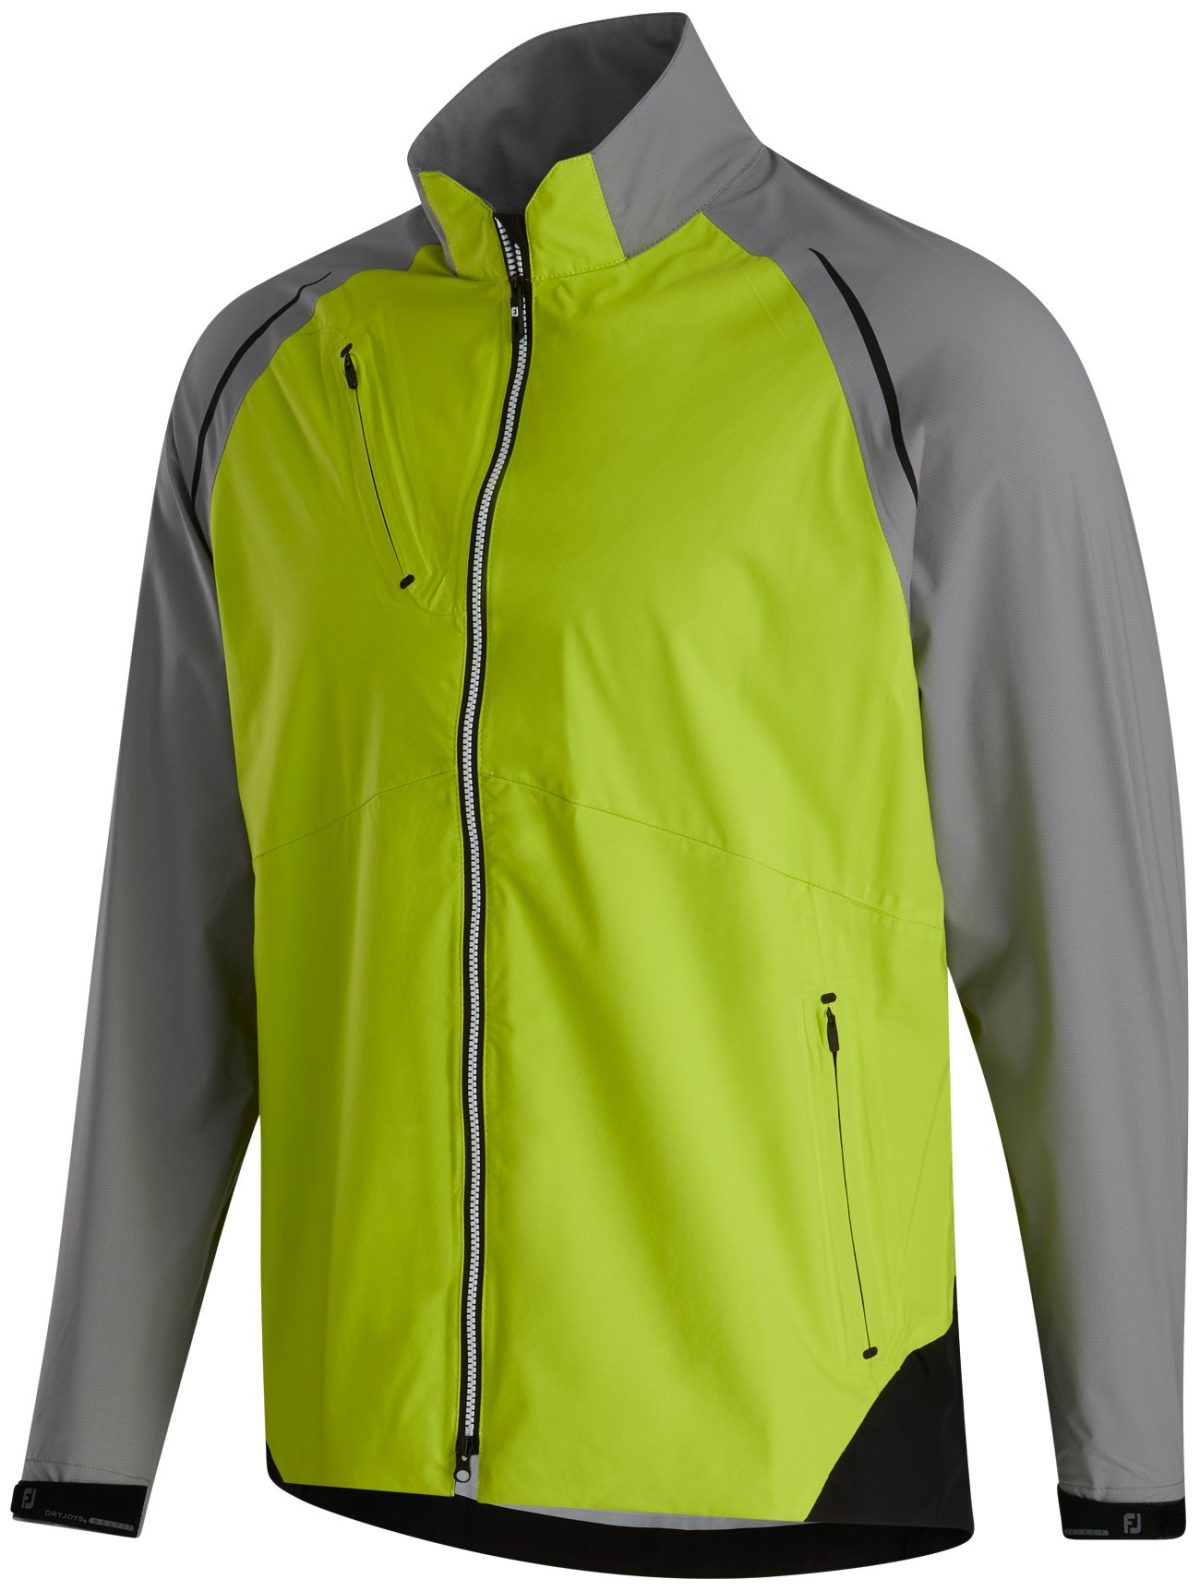 FootJoy Men's Dryjoys Select Golf Rain Jacket in Grey/Lime, Size L